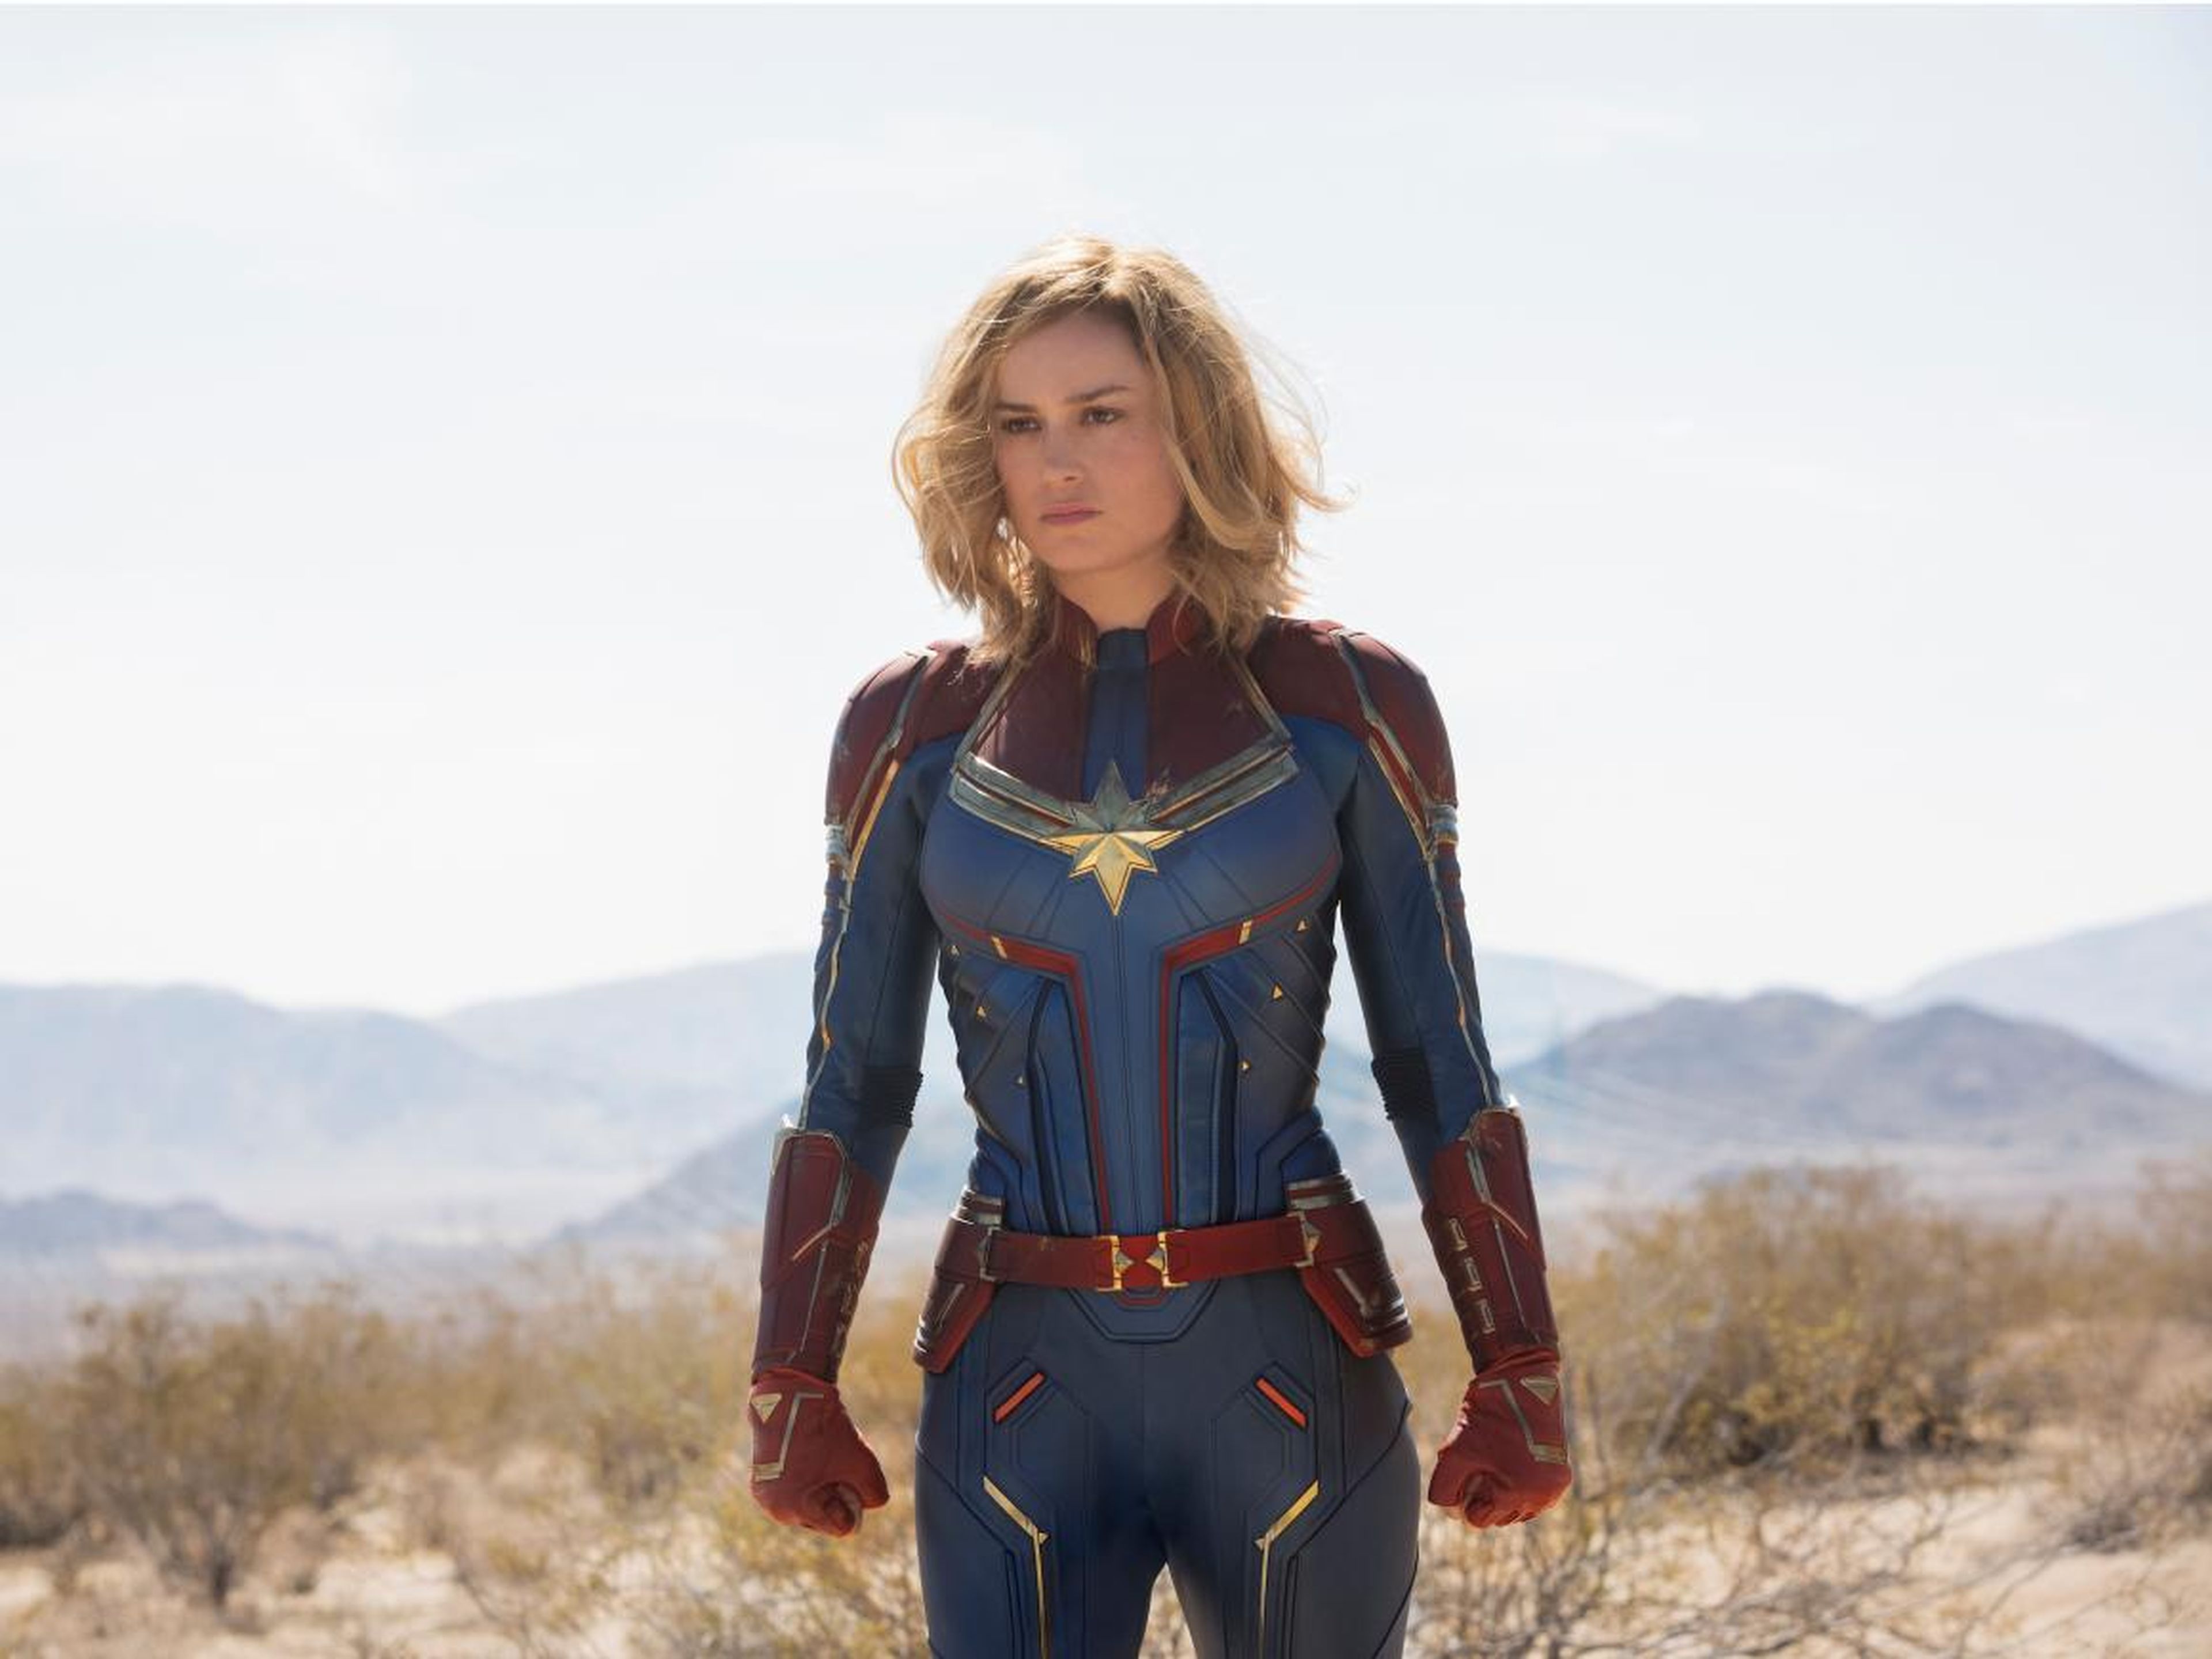 Brie Larson as Captain Marvel.